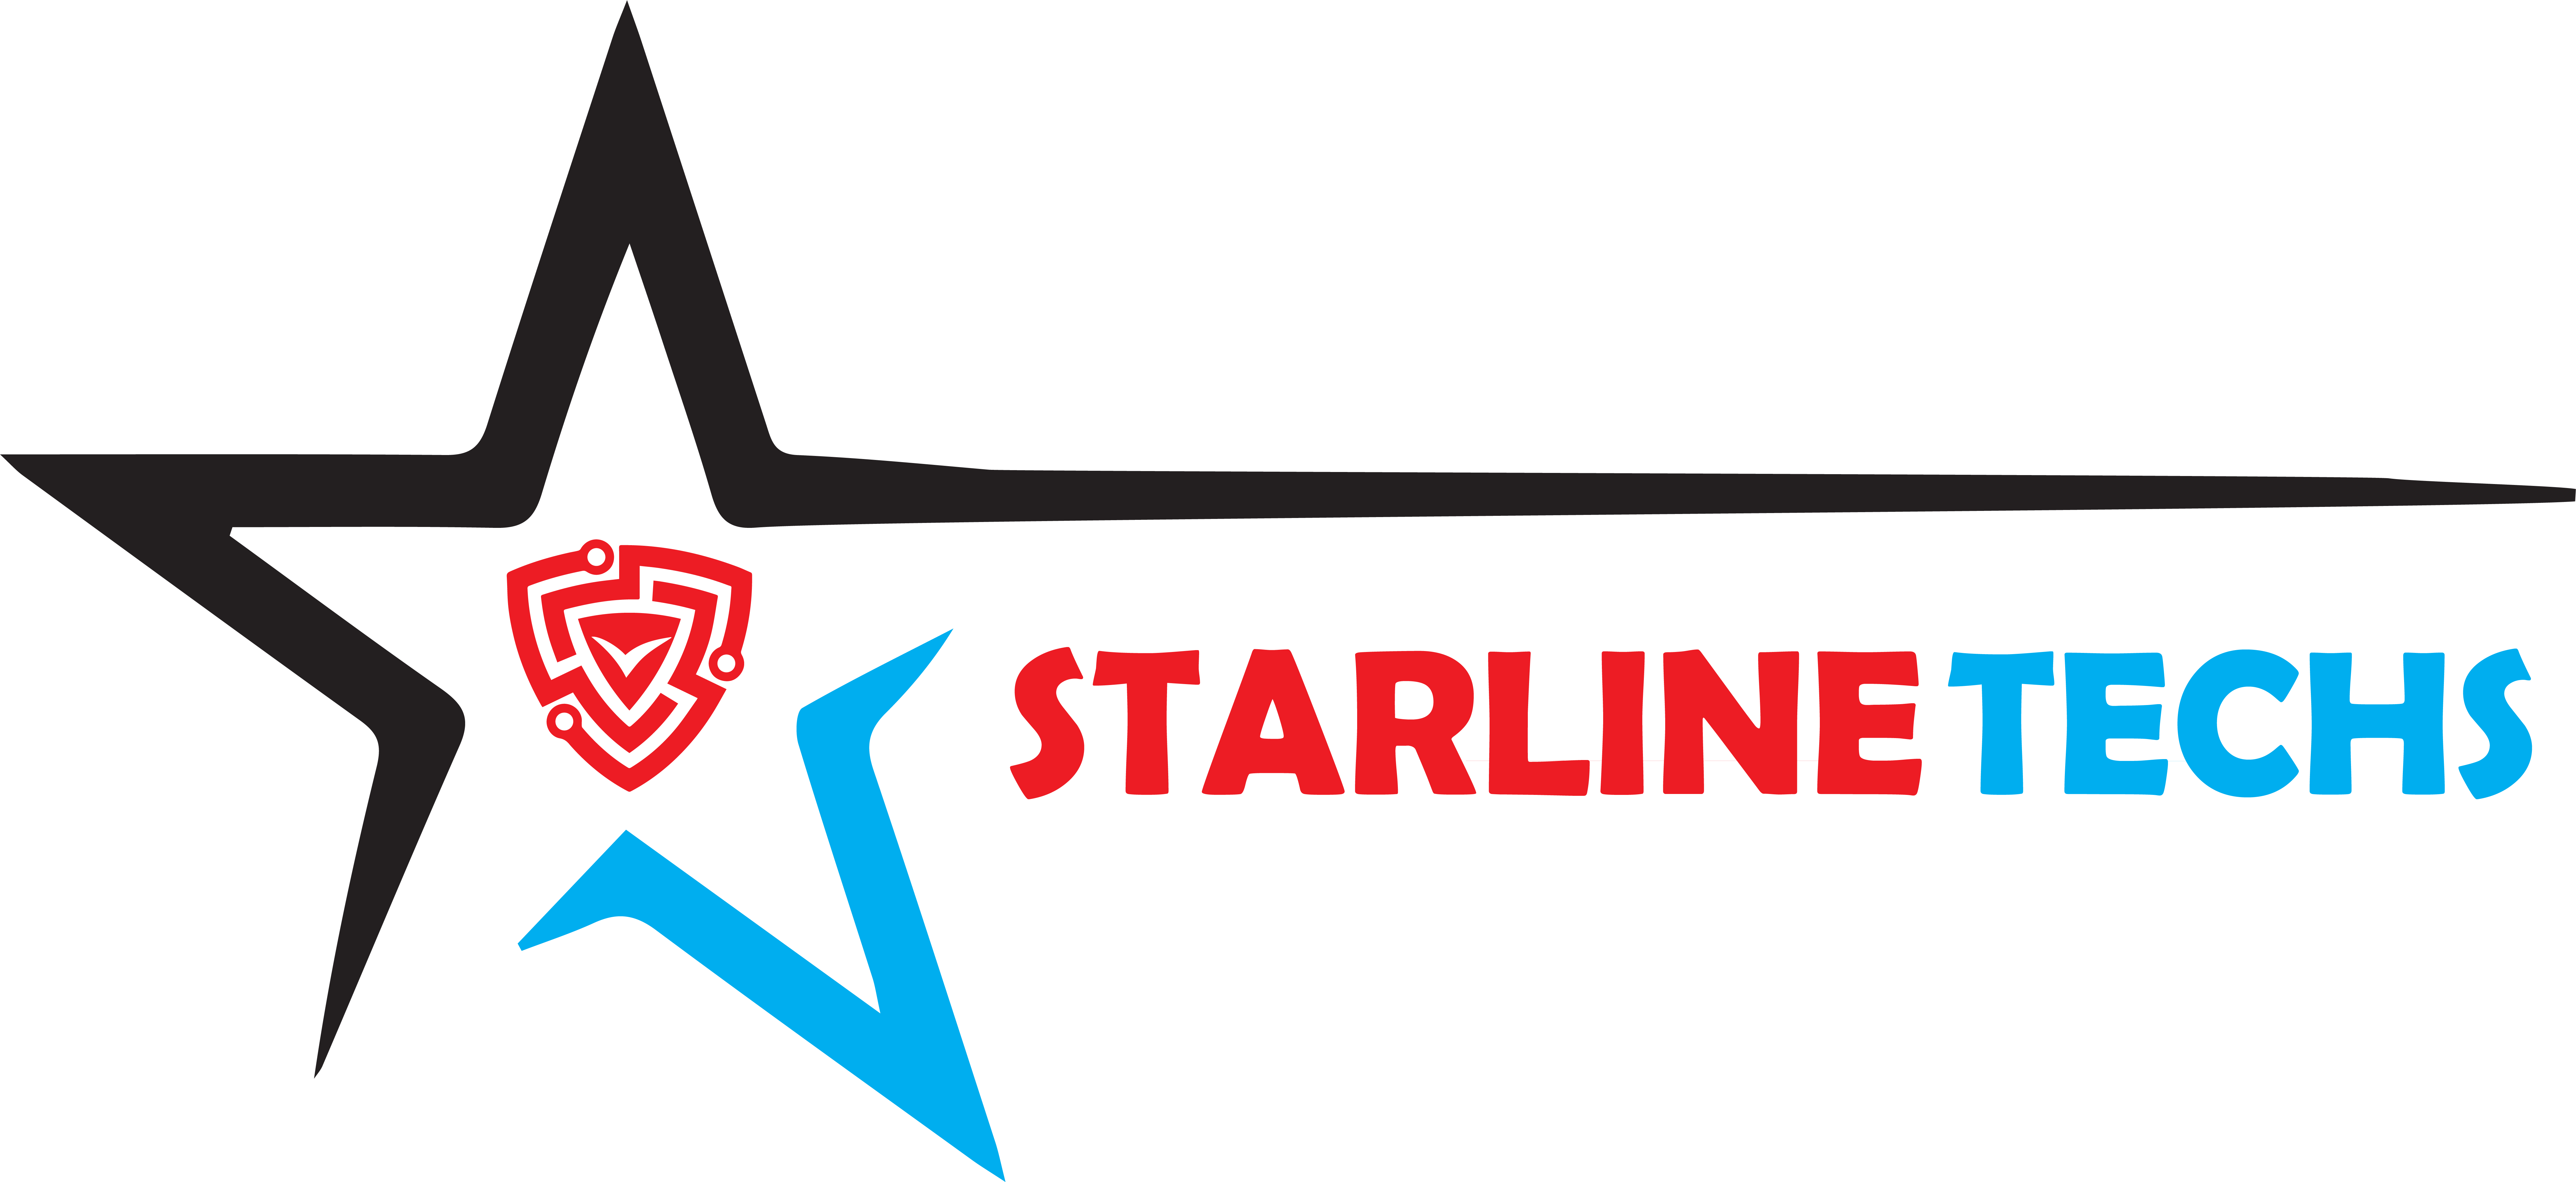 Starlinetechs